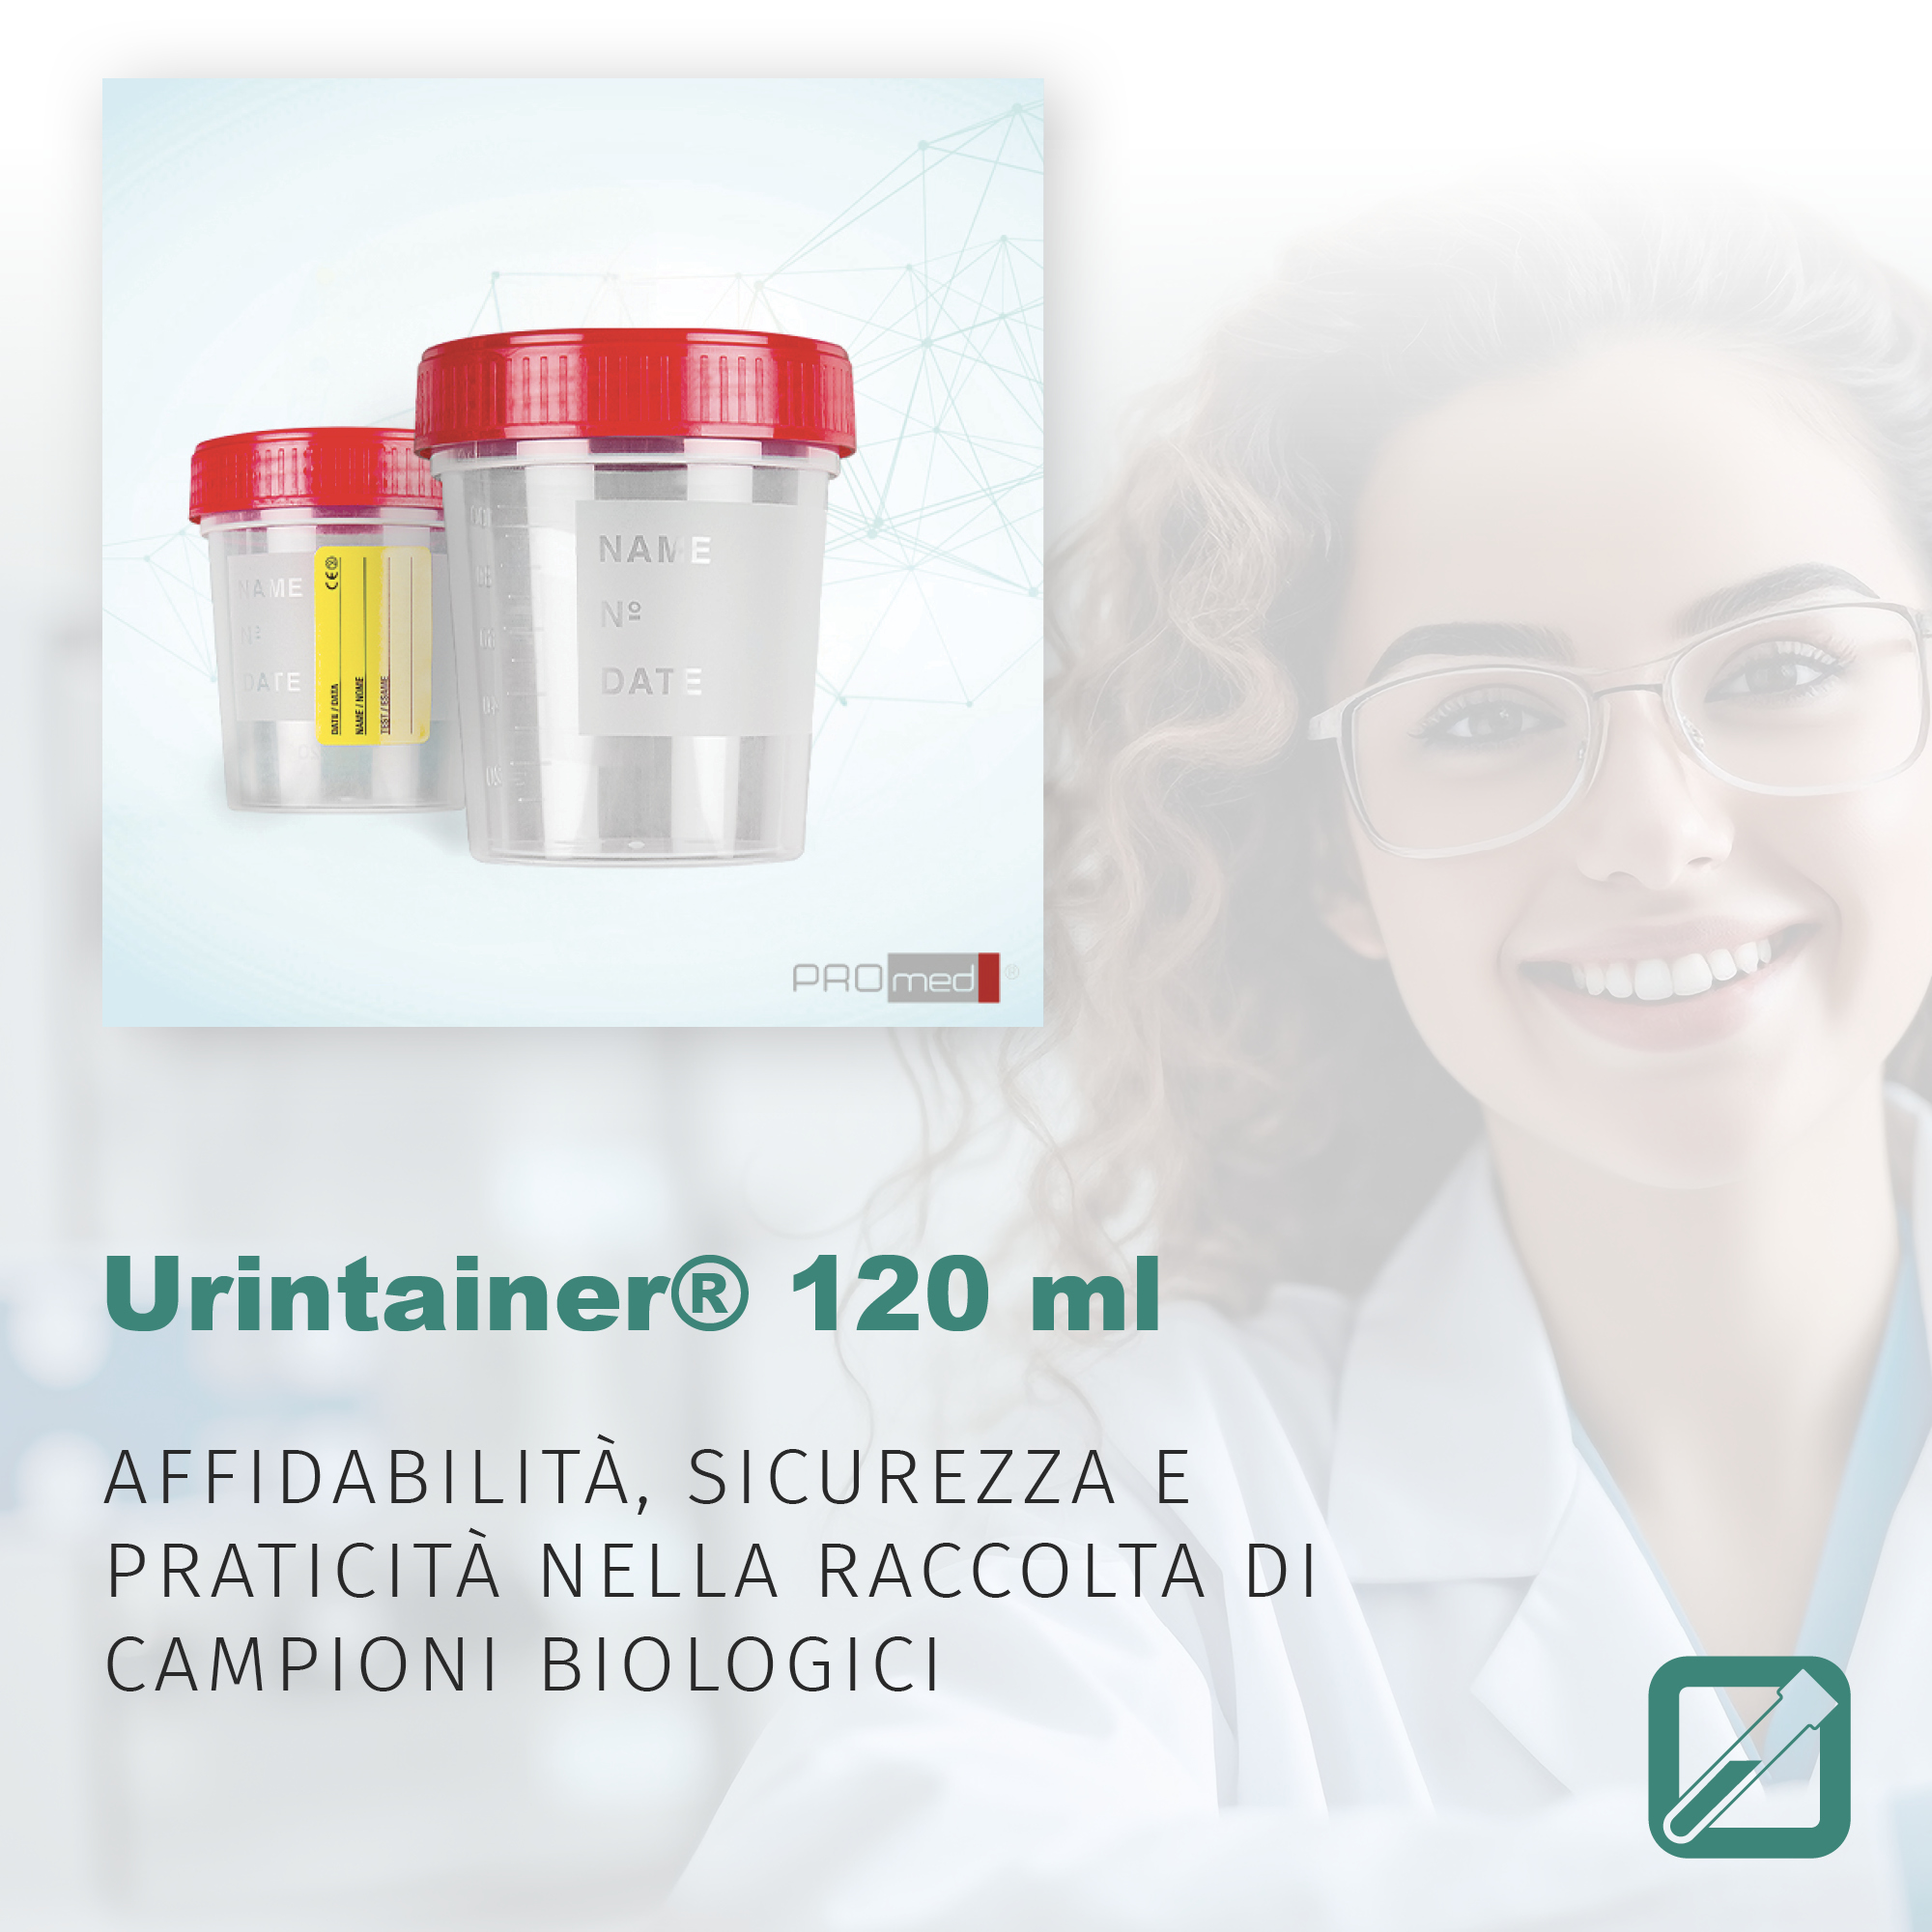 Contenitori Urintainer® 120 ml